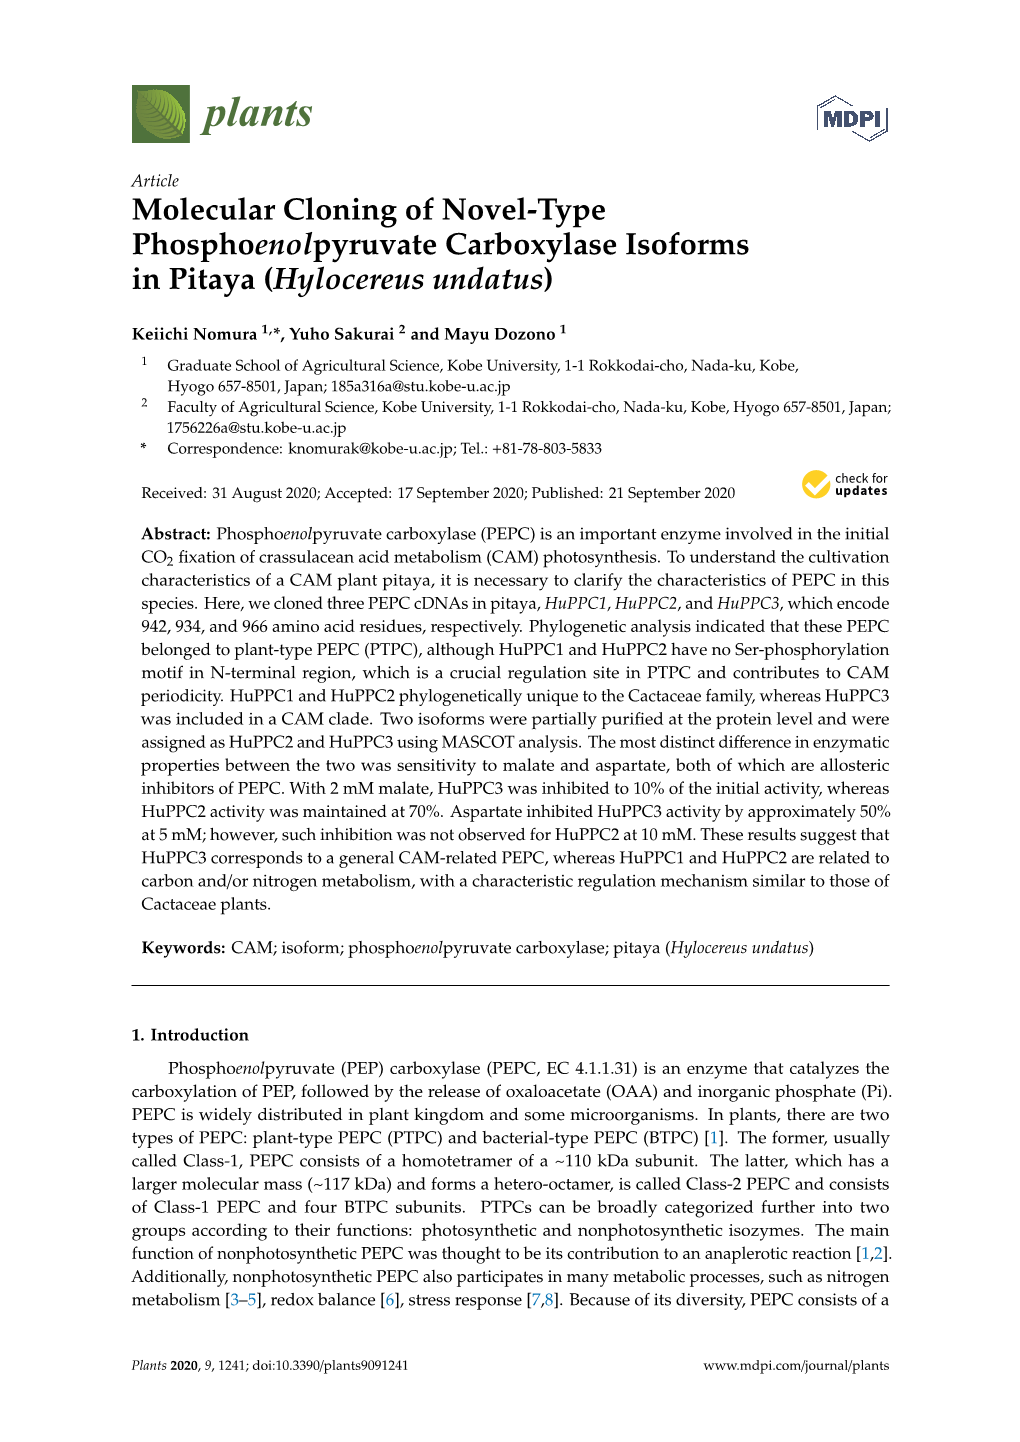 Molecular Cloning of Novel-Type Phosphoenolpyruvate Carboxylase Isoforms in Pitaya (Hylocereus Undatus)